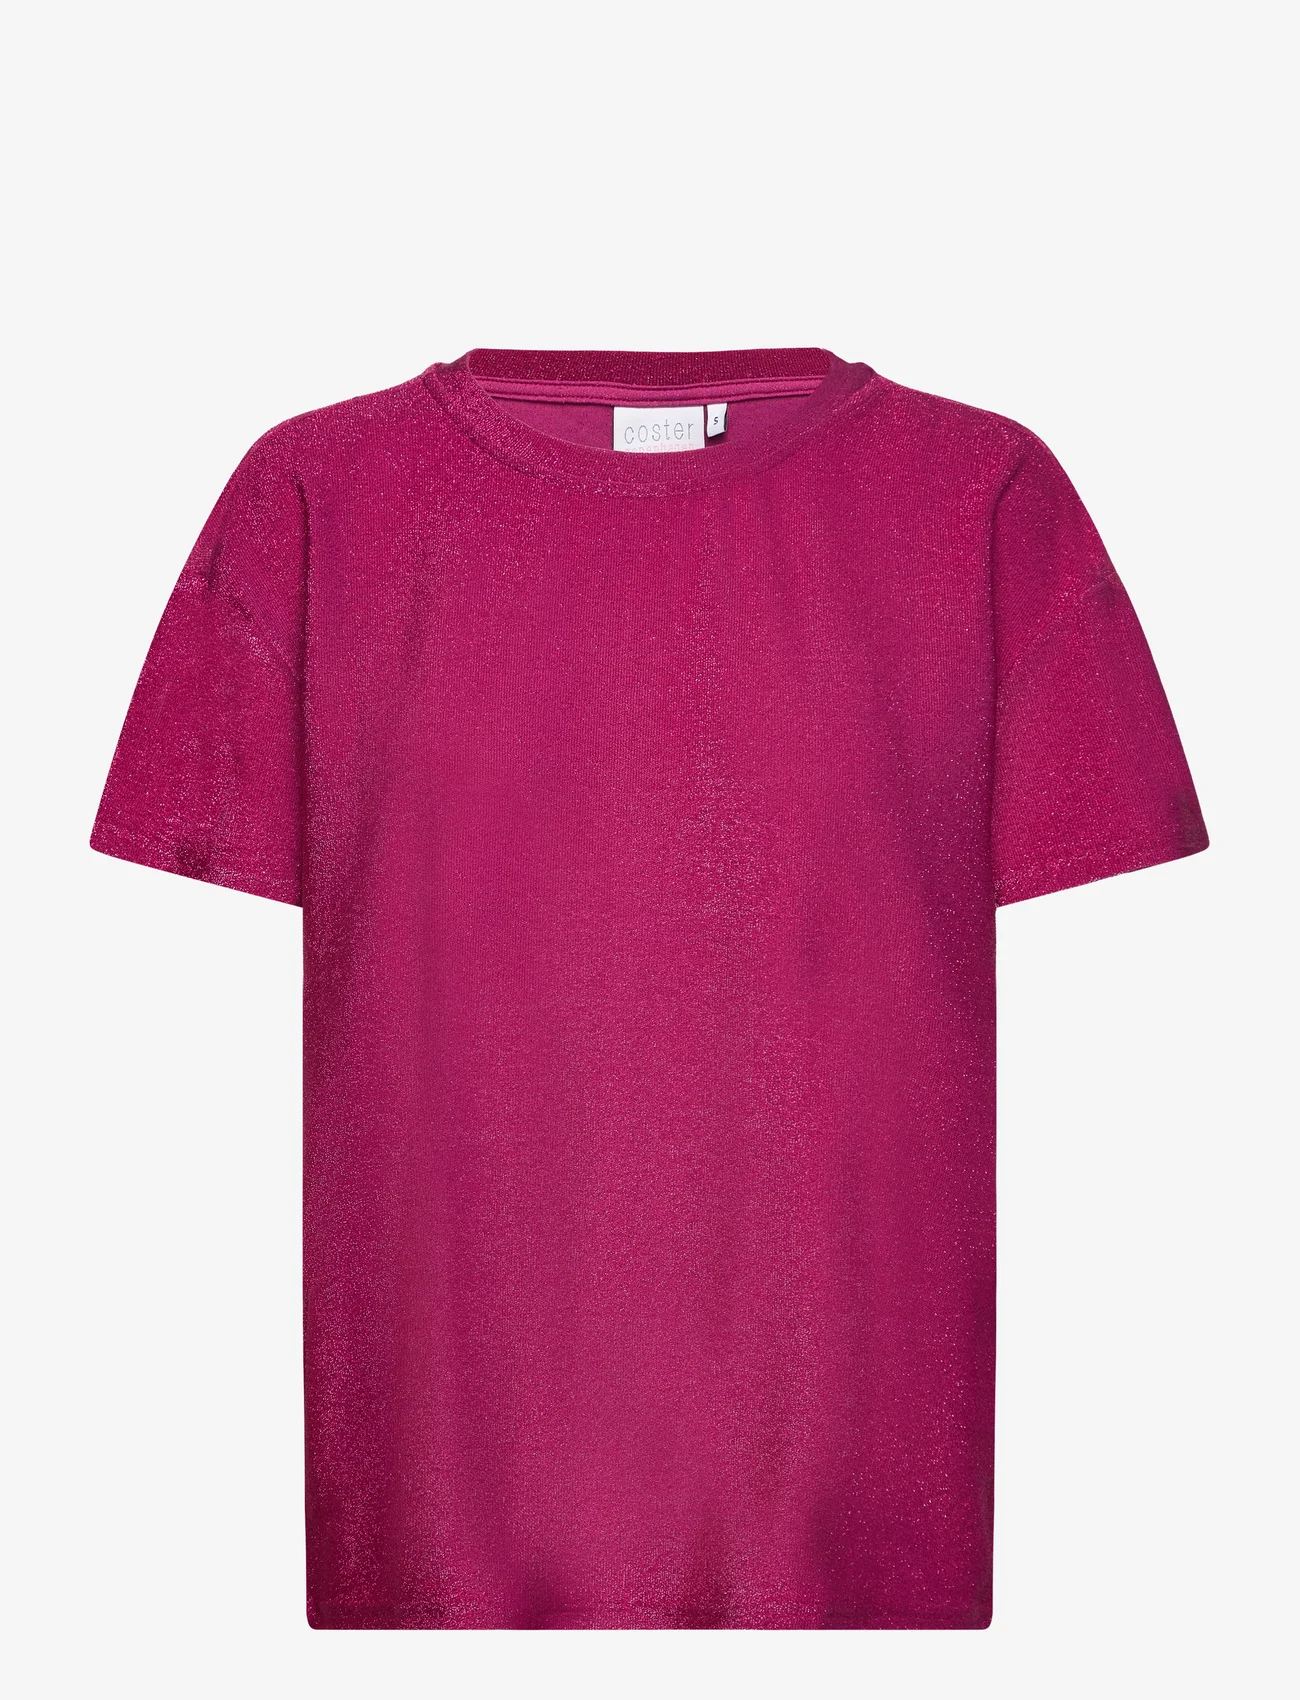 Coster Copenhagen - Shimmer tee in lurex jersey - t-shirts - pink shimmer - 0